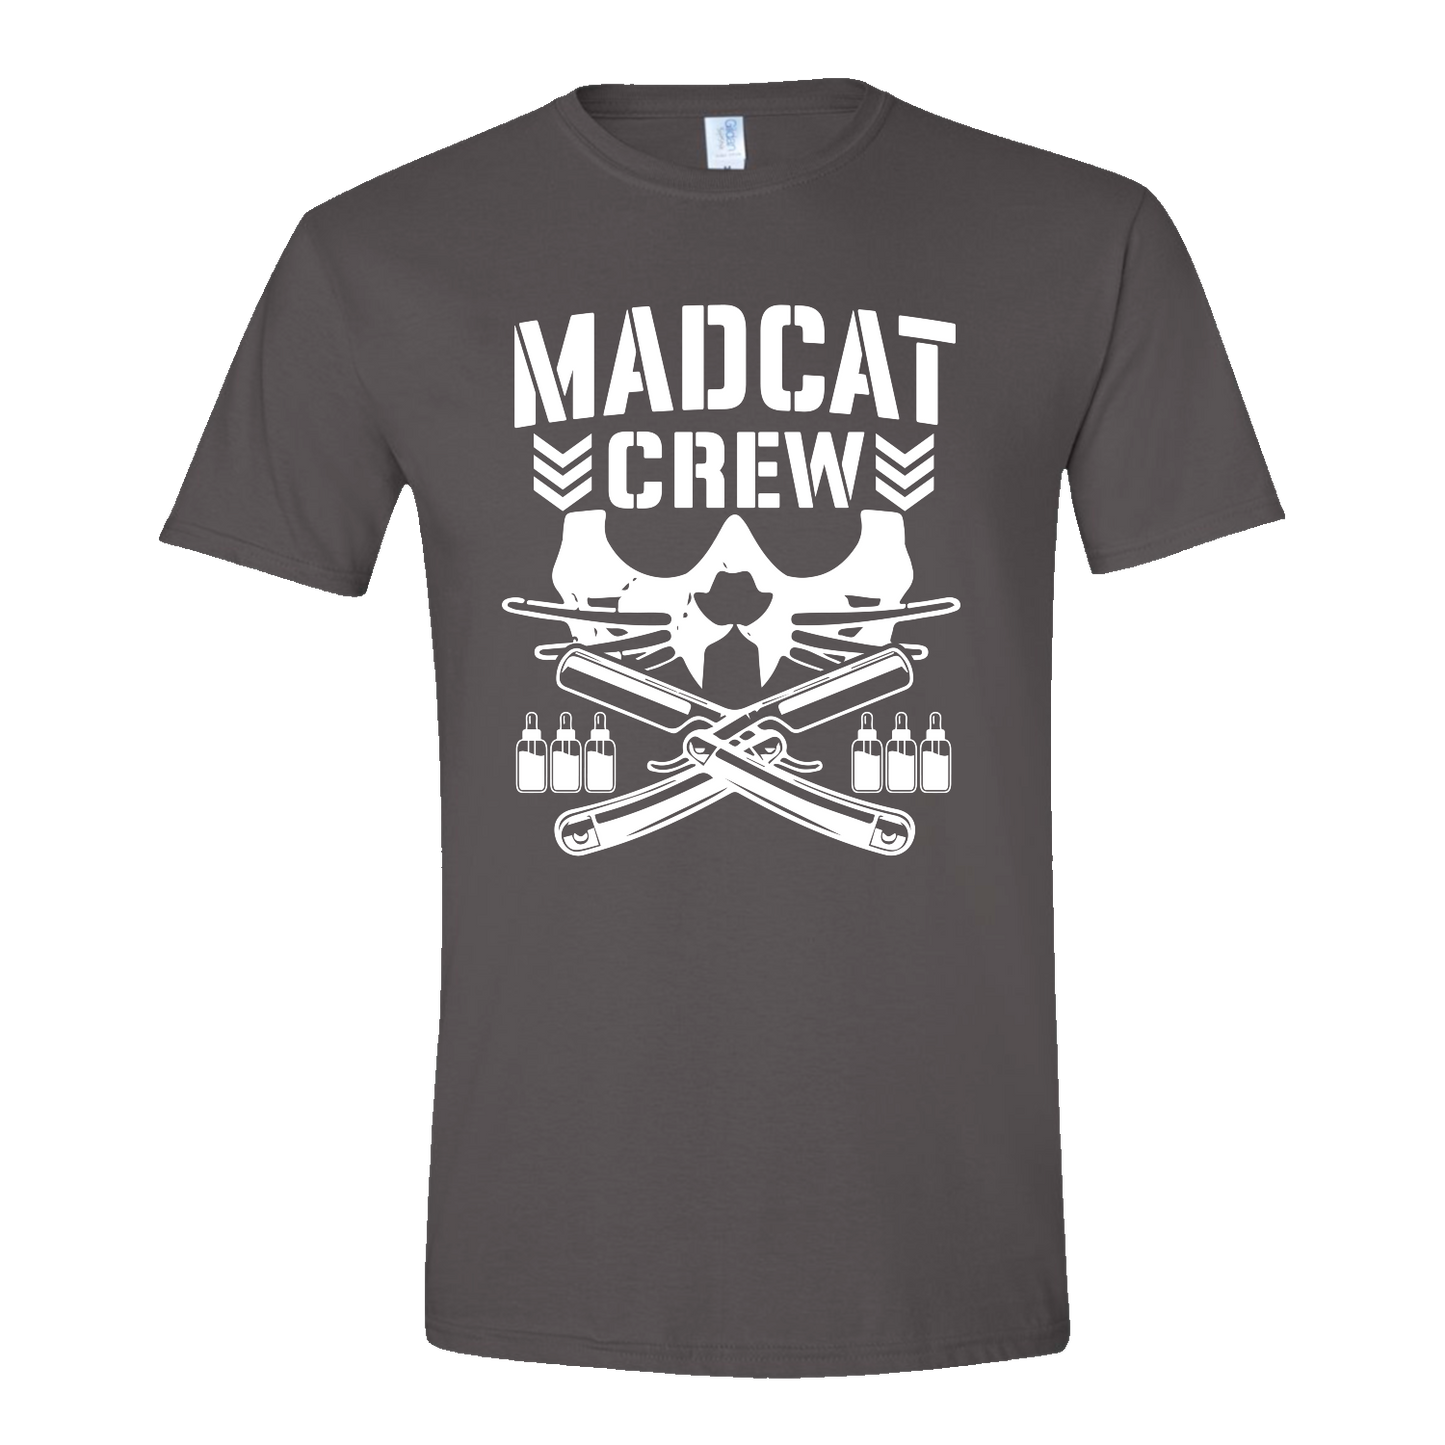 Madcat Beard Club (T-Shirt)